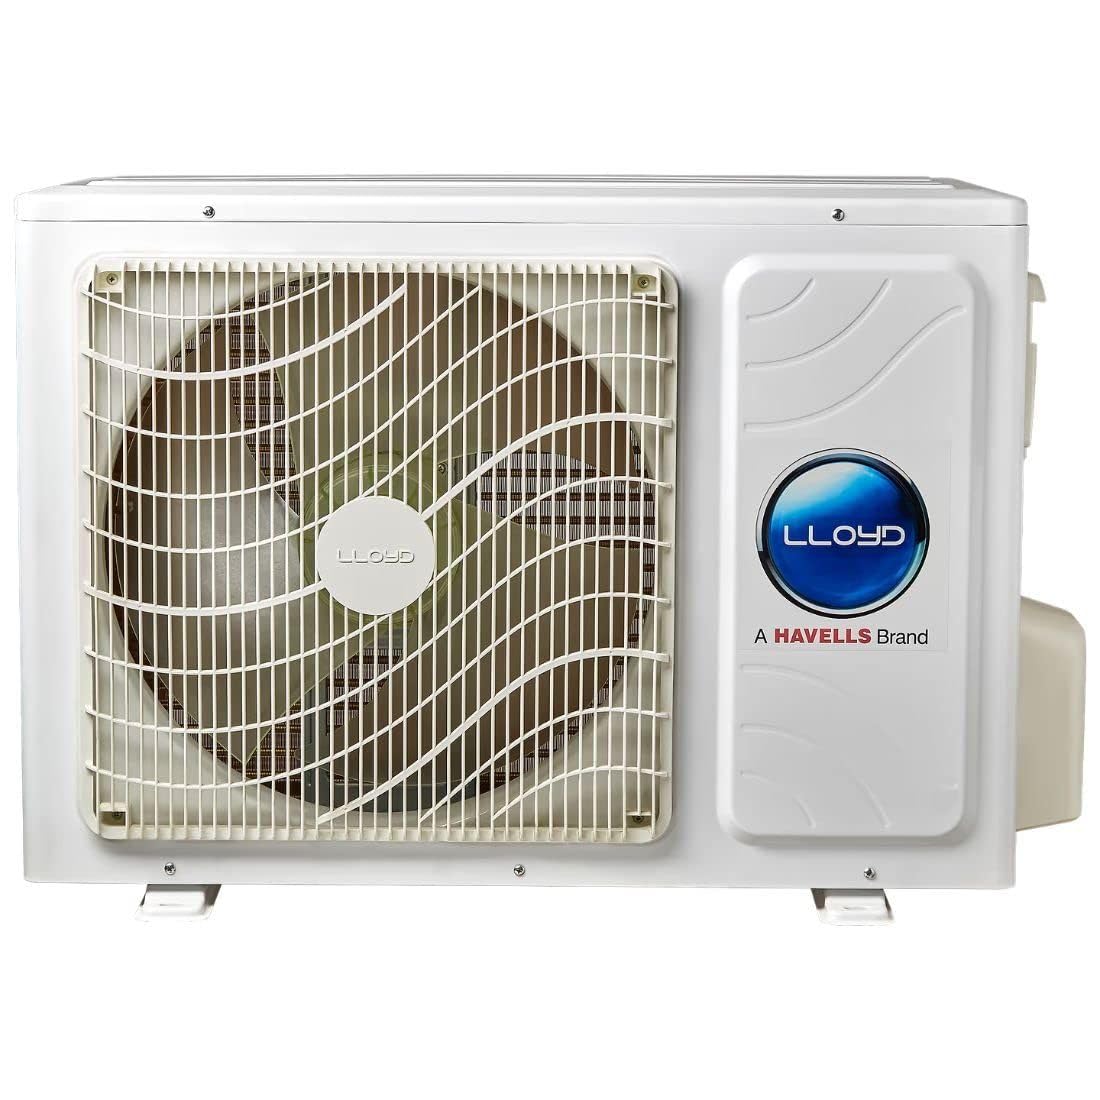 LLOYD Air Conditioner GLS12I3FOSBV Inverter 1 TON 5 in 1 Convertible AC